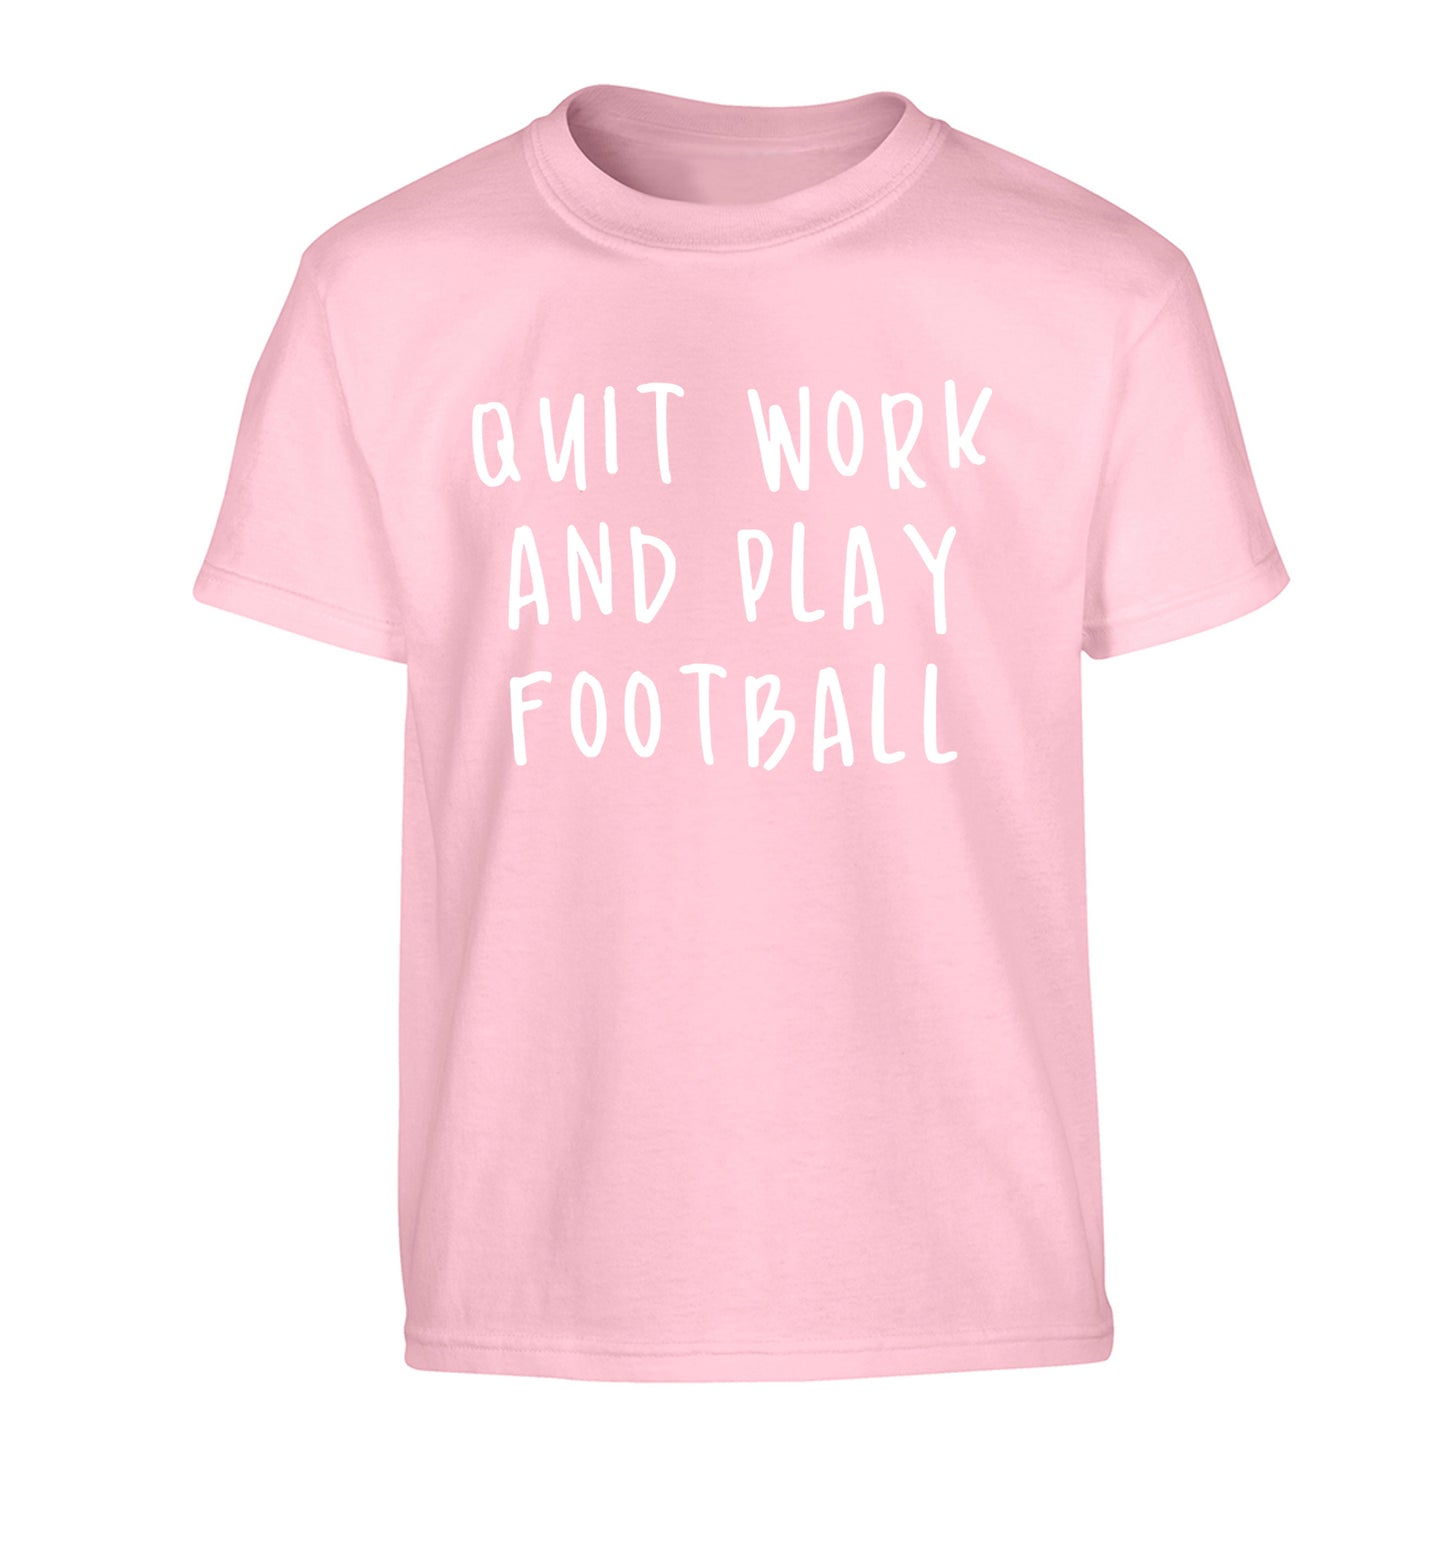 Quit work play football Children's light pink Tshirt 12-14 Years